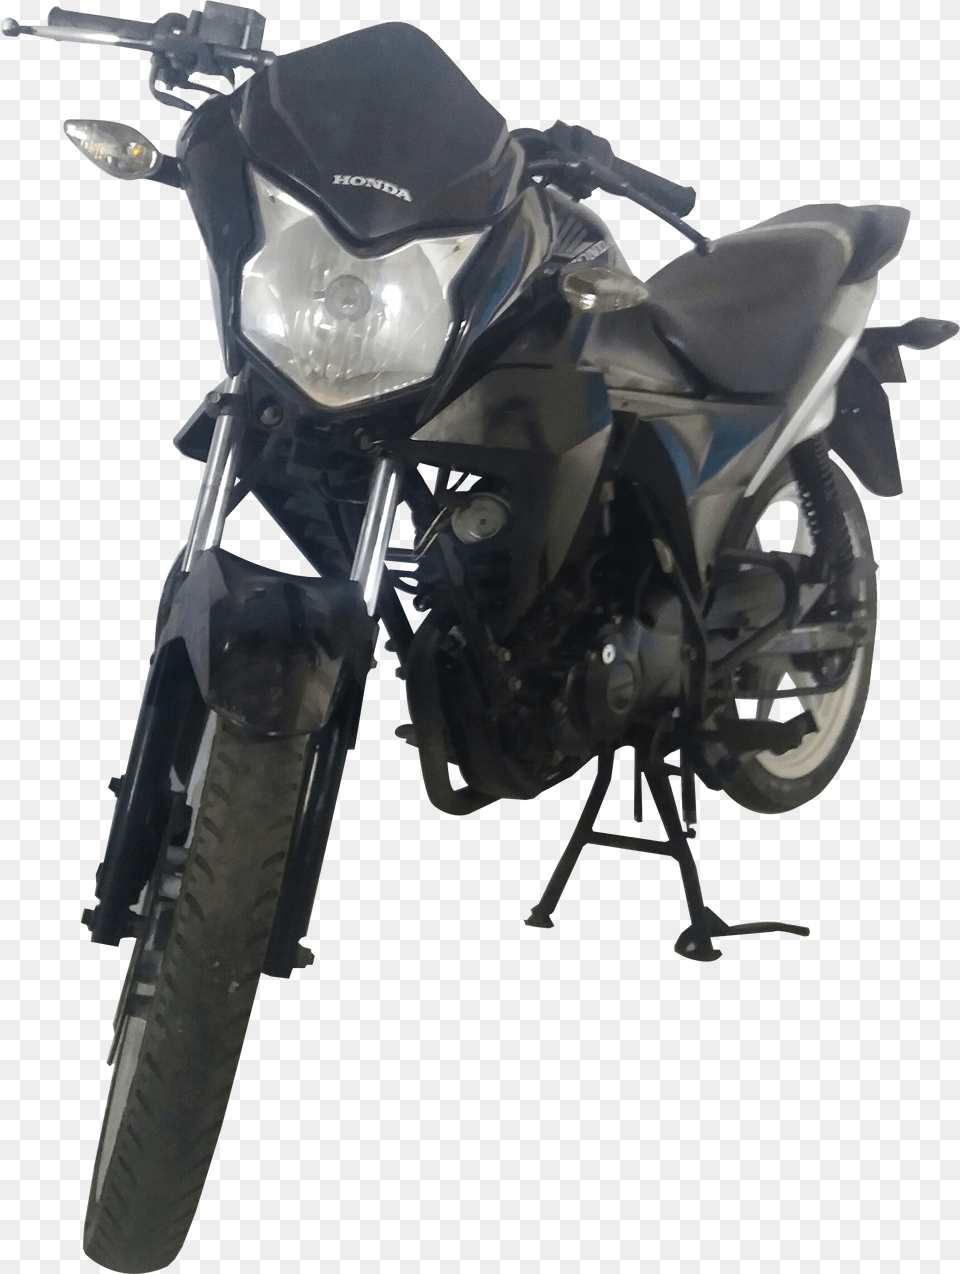 Cb 110 Black, Motorcycle, Transportation, Vehicle, Headlight Png Image